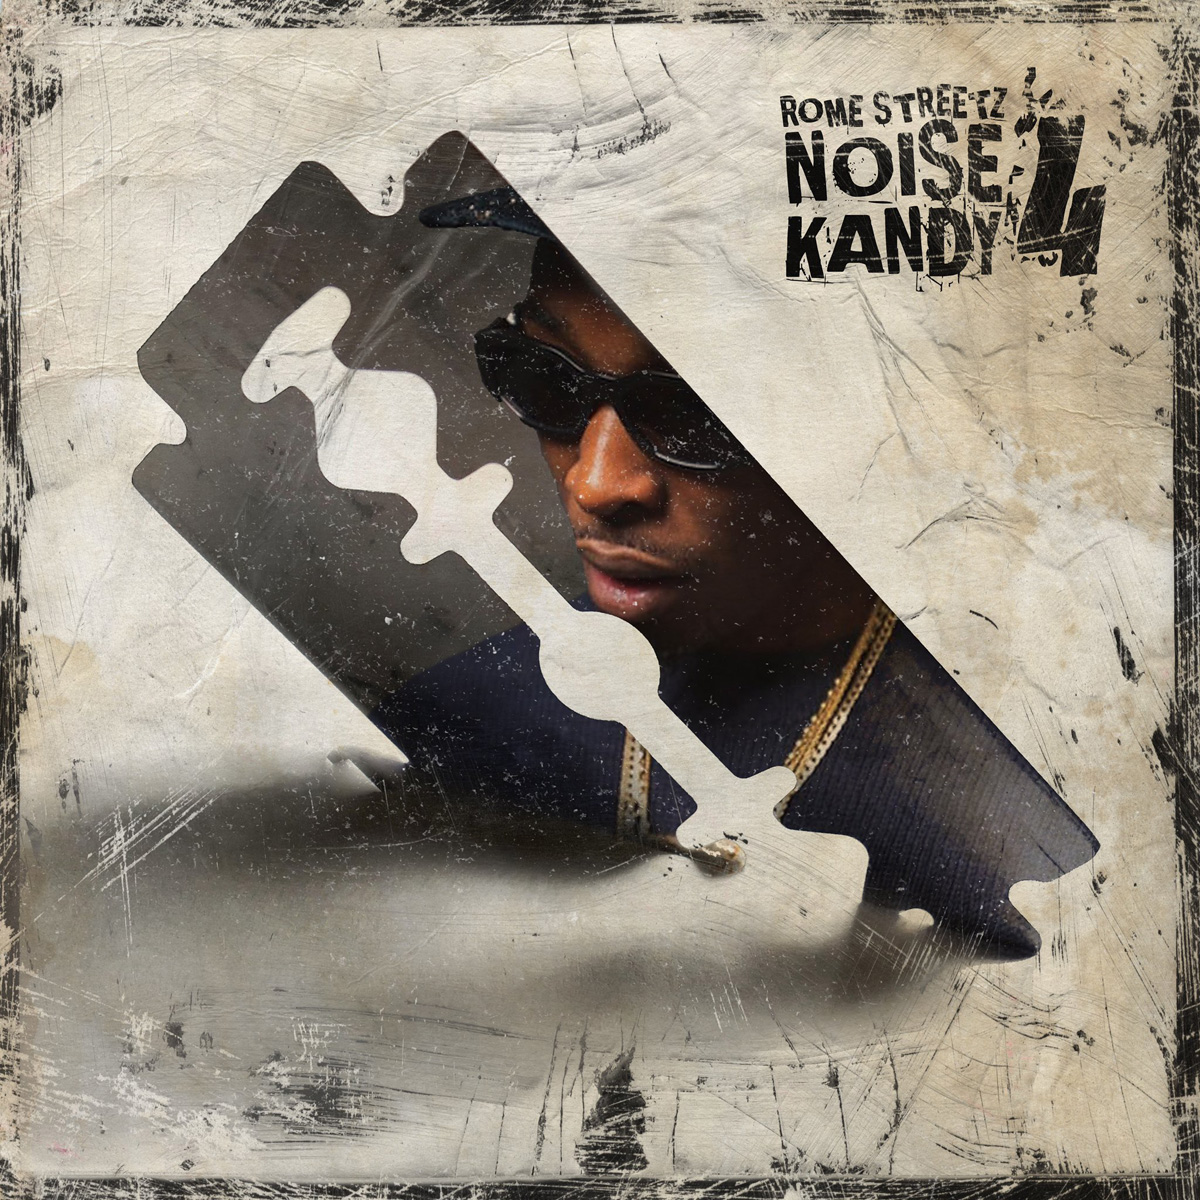 Noise Kandy 4 album cover, Rome Streetz mirror image on razor-blade.